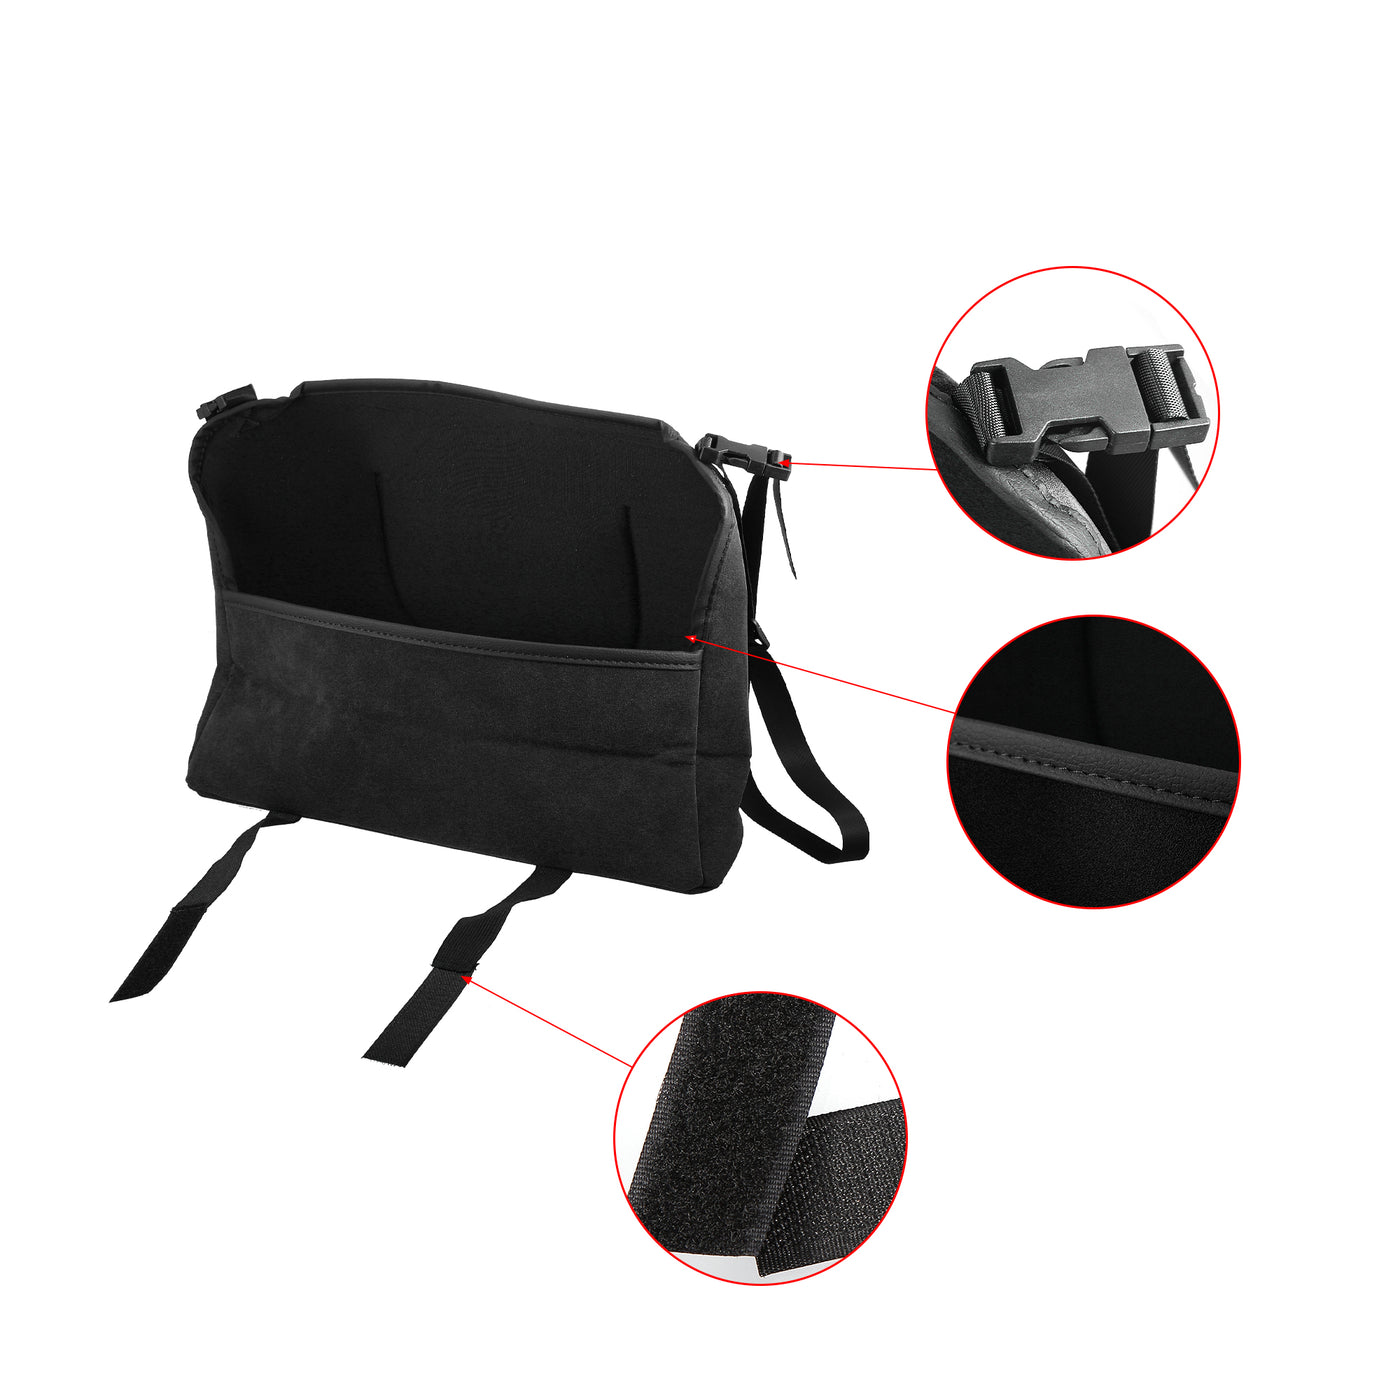 X AUTOHAUX 1 Pcs Car Seat Back Organizer Large Capacity Car Handbag Holder for Document Phone Storage Faux Leather Black